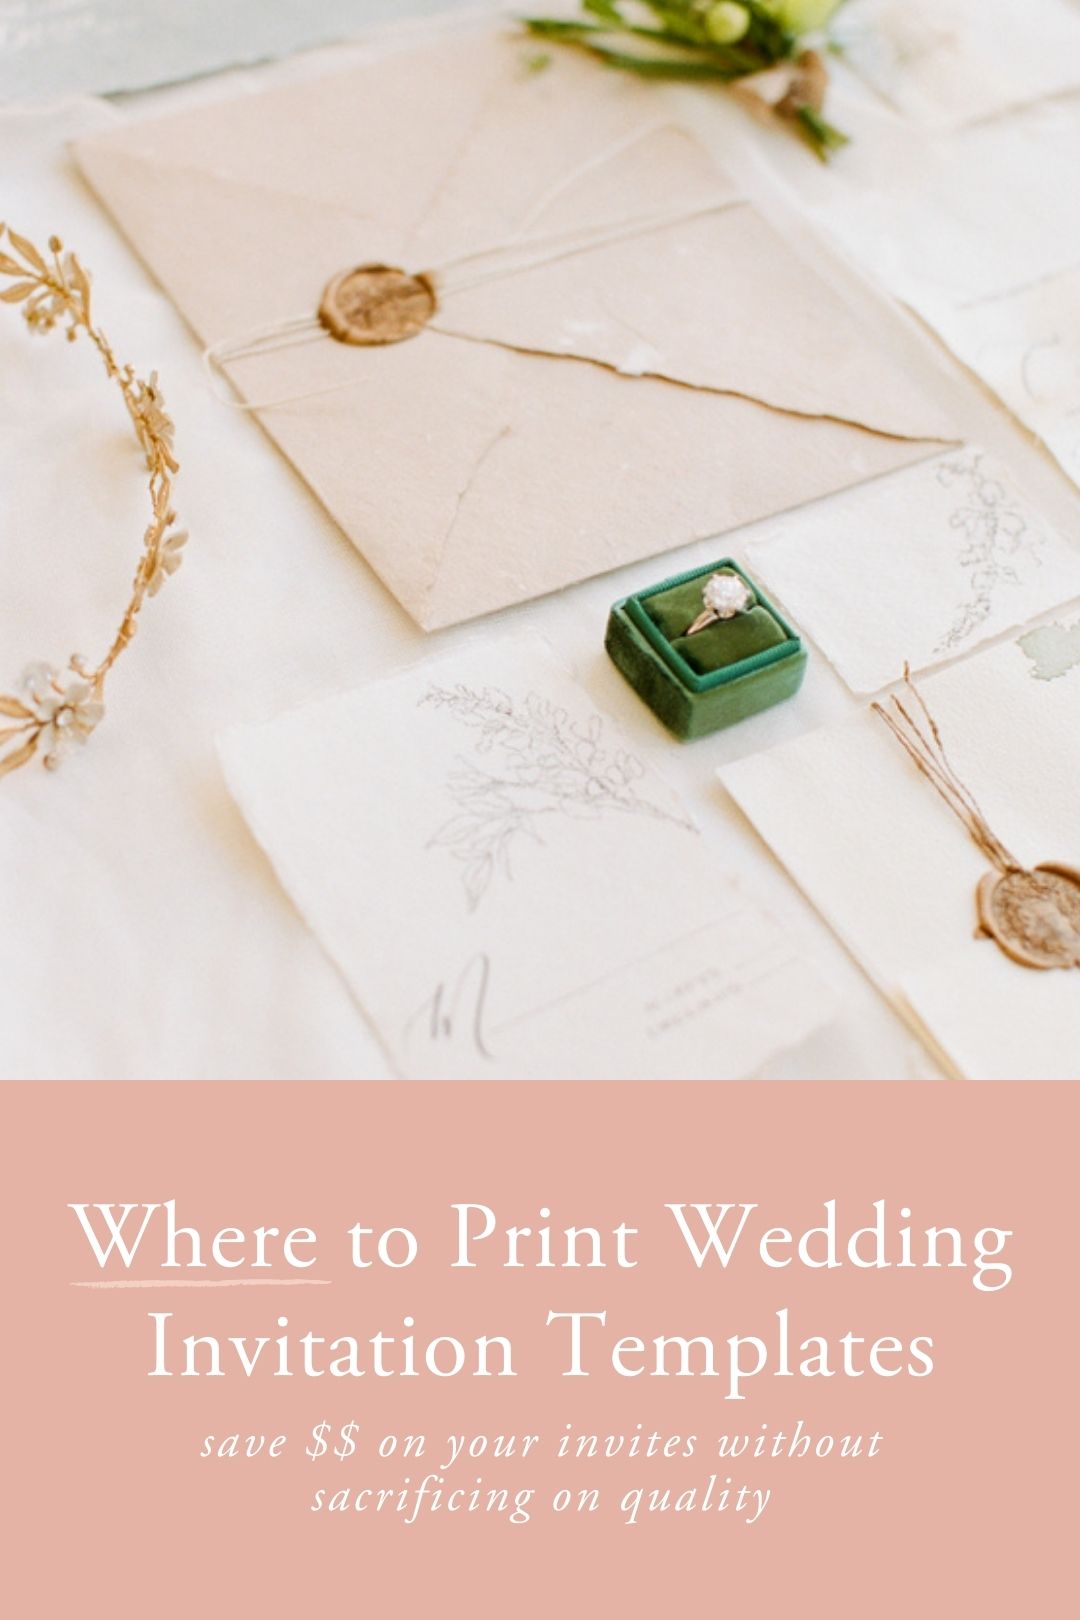 Where to Print Wedding Invitations Online | Pipkin Paper Company